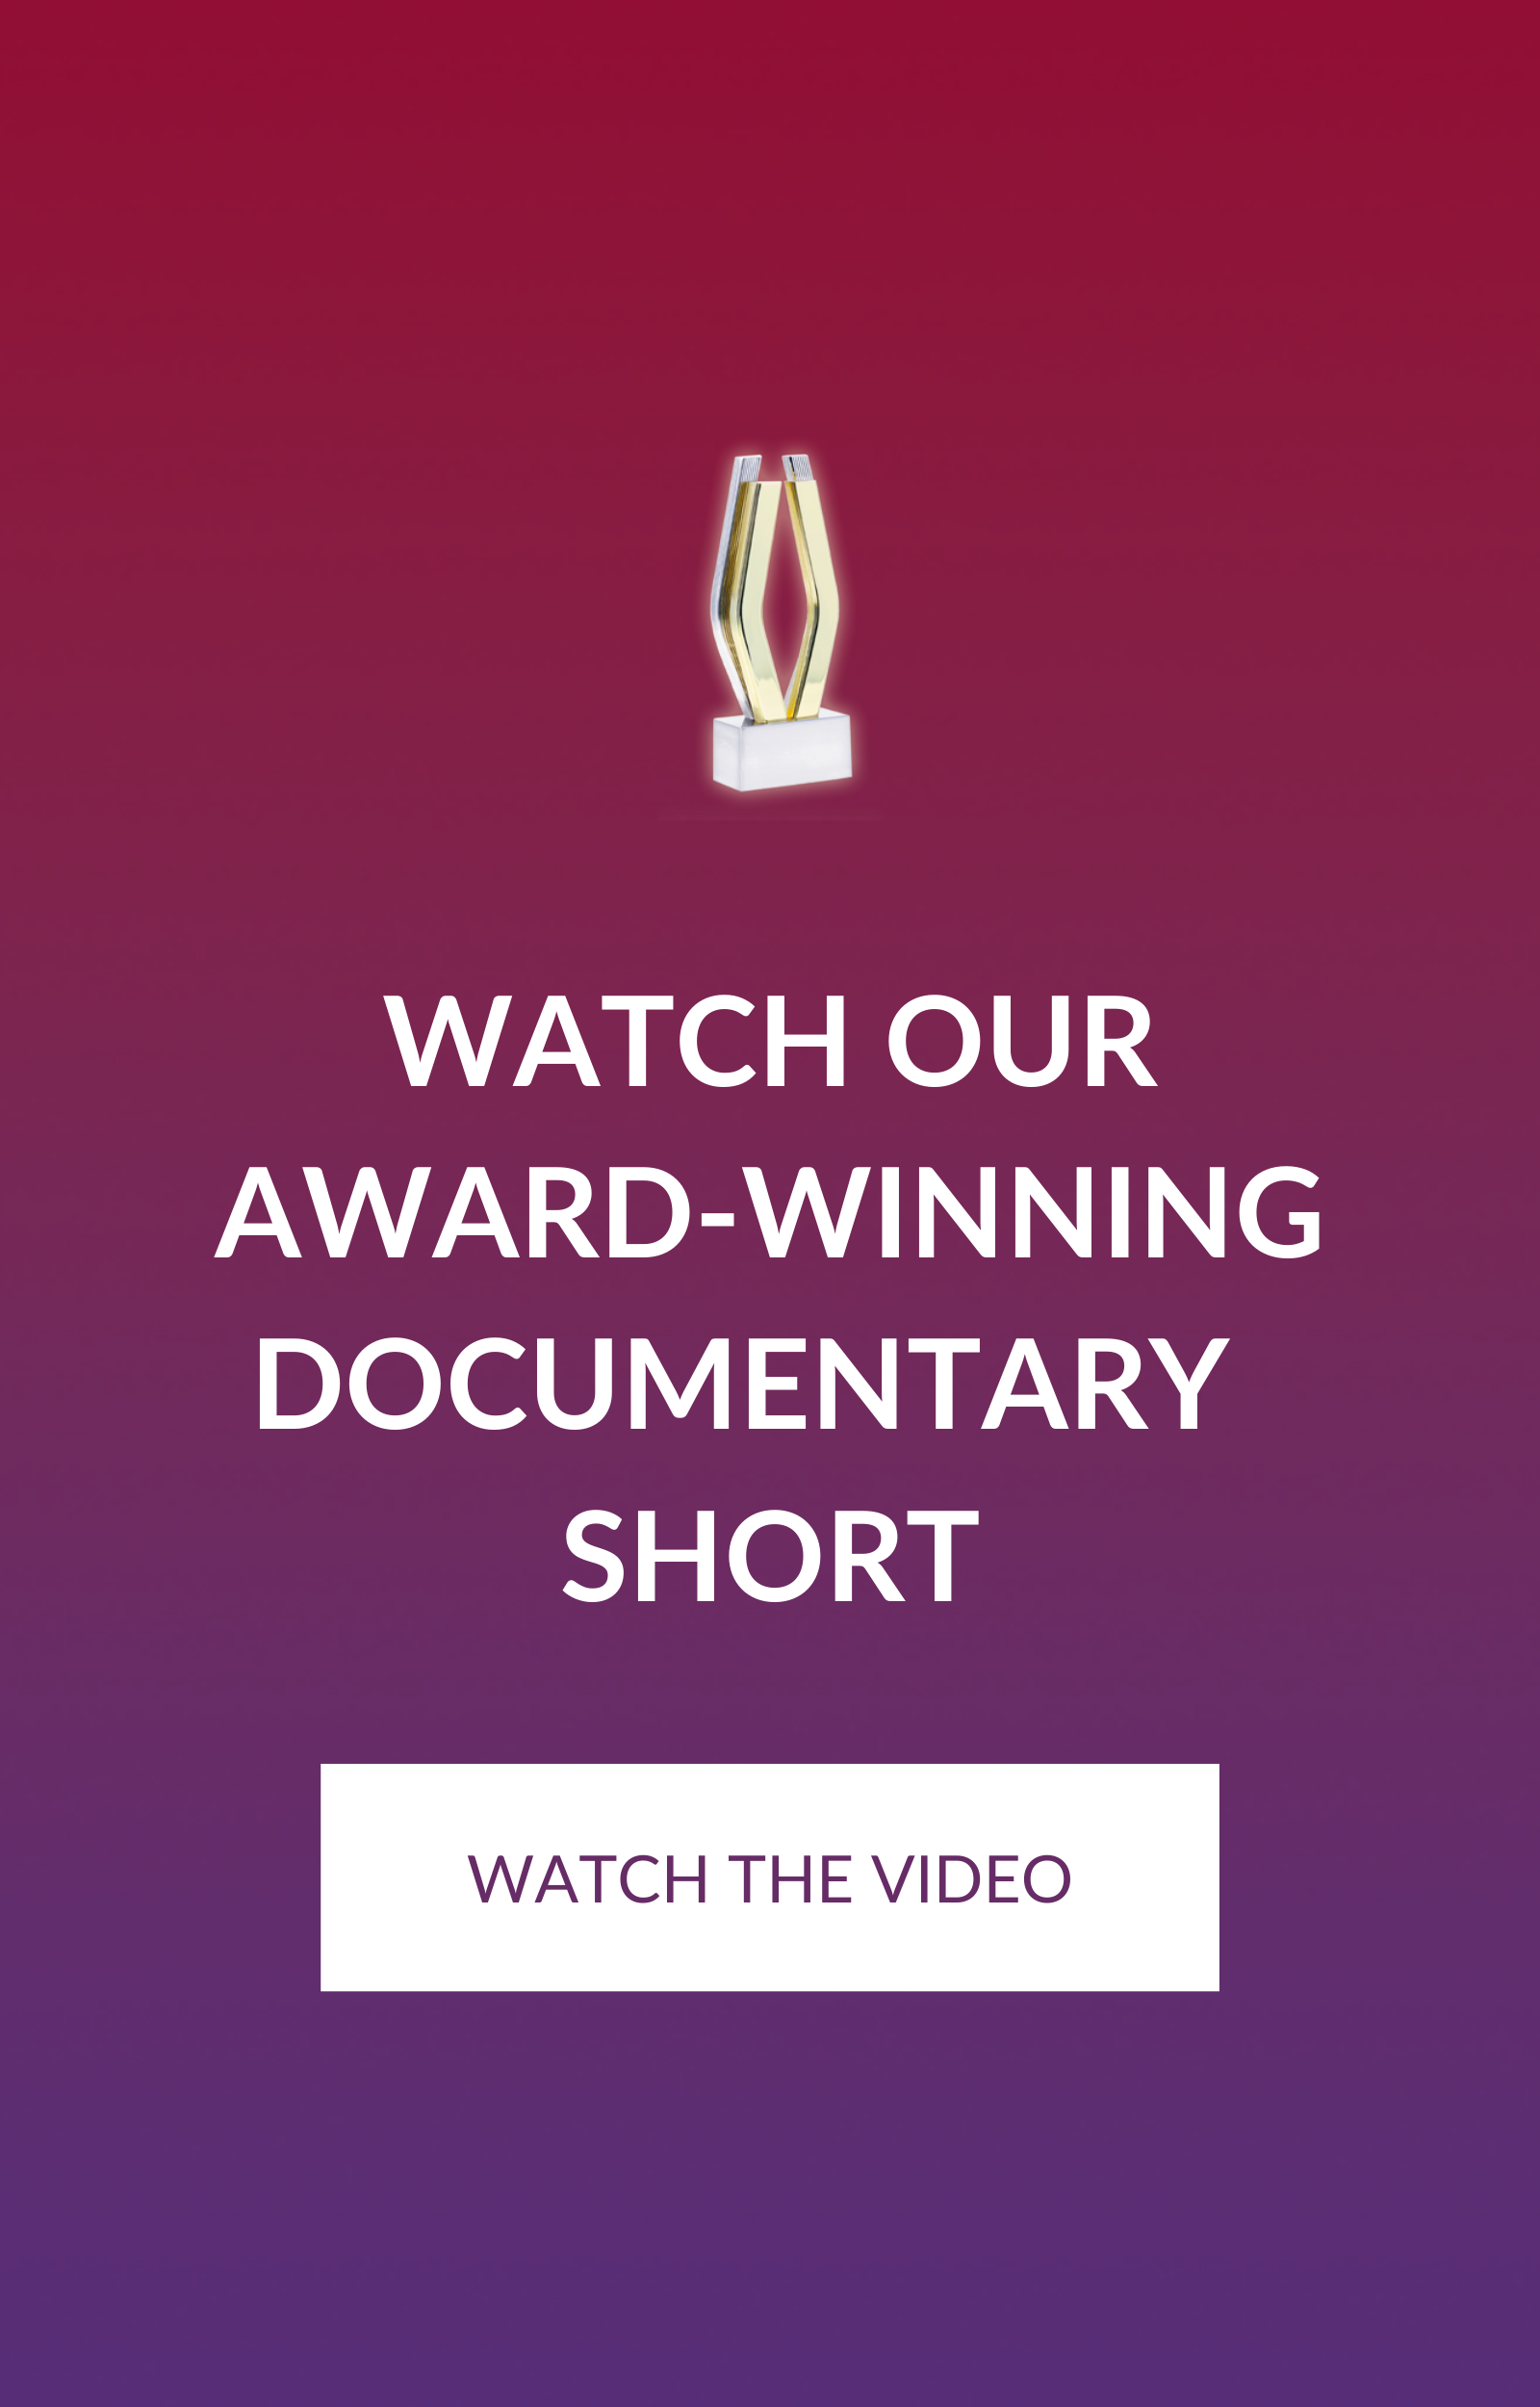 Capstone documentary by Lakin award screenshot